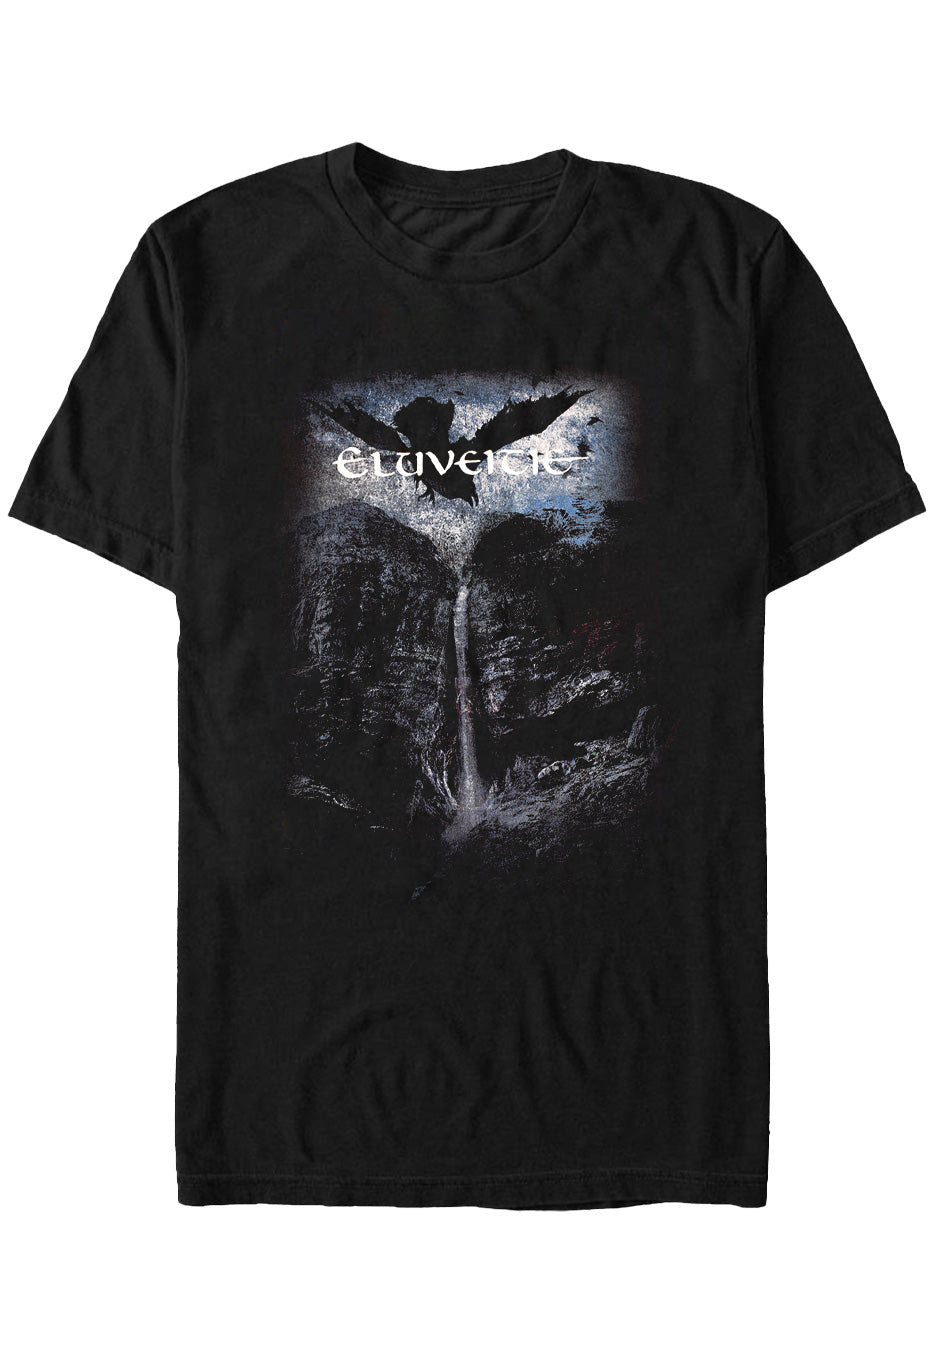 Eluveitie - Ategnatos - T-Shirt